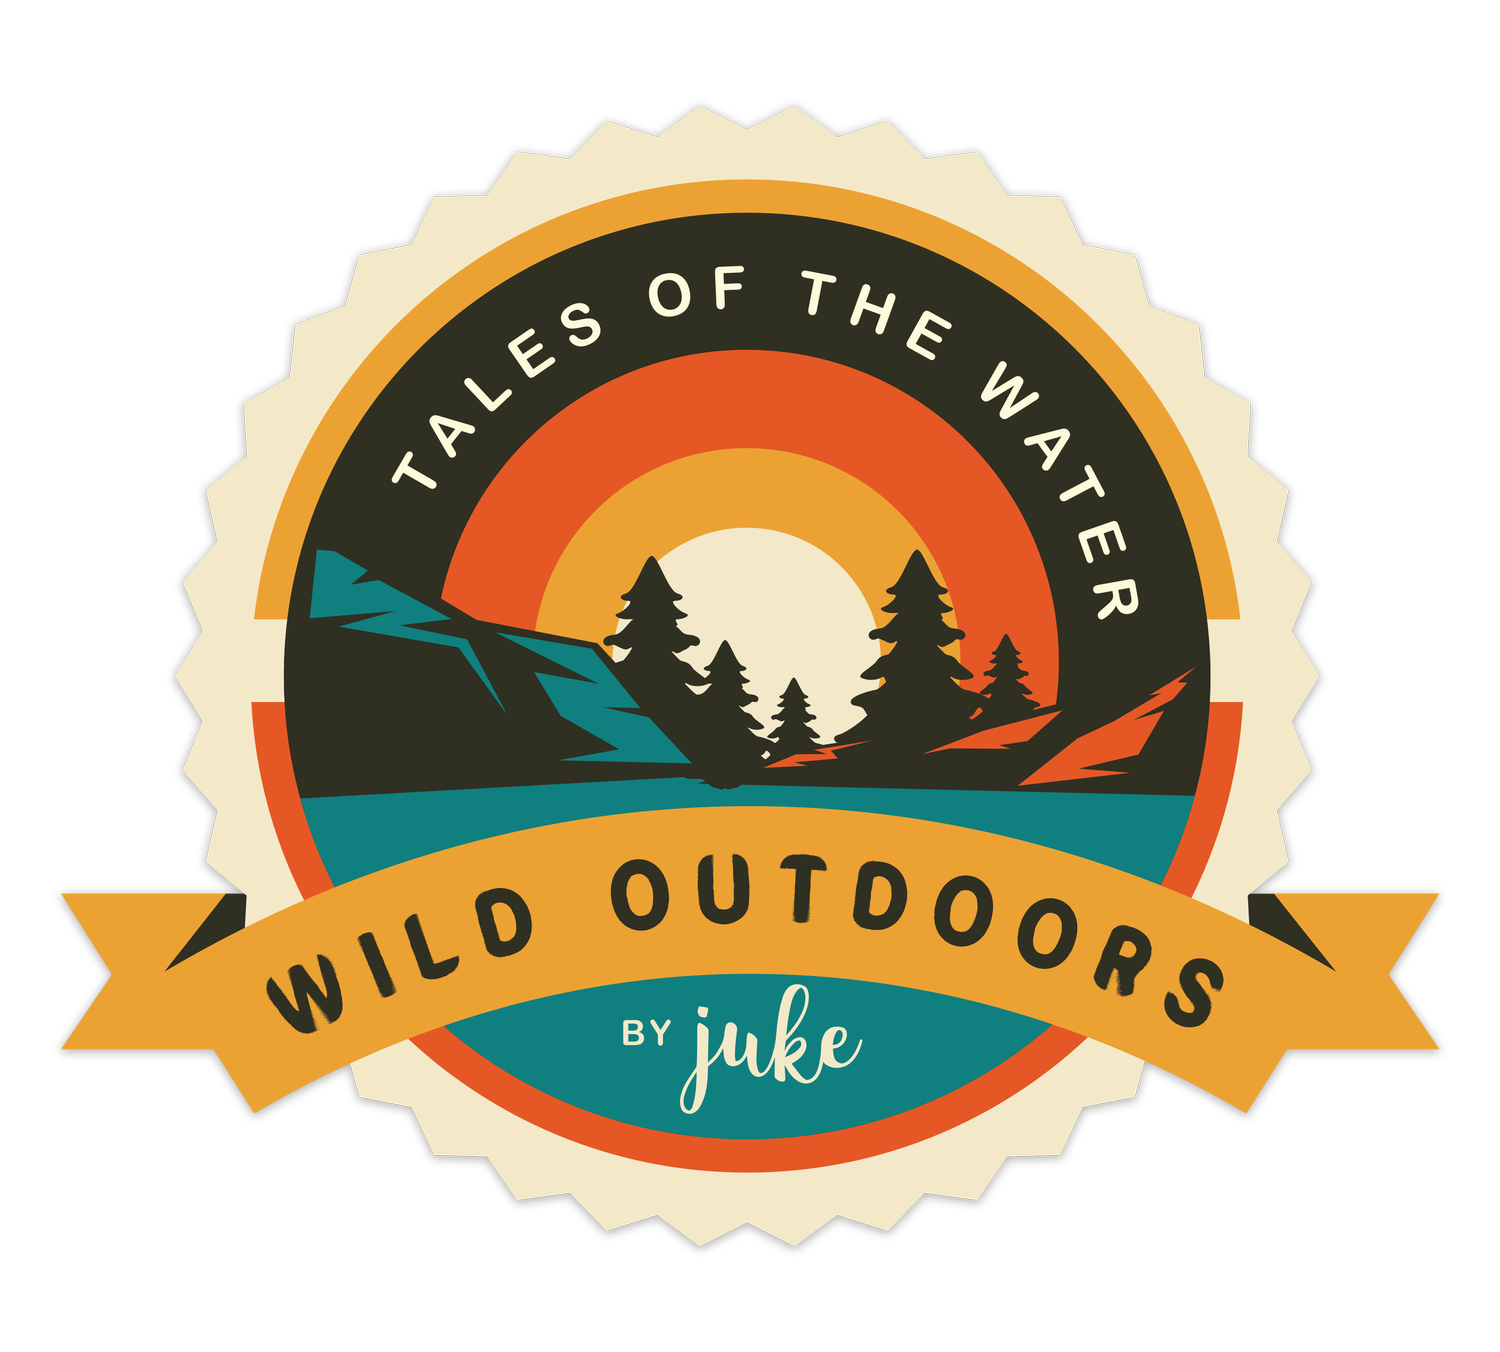 Jukes Wild Outdoors Inc